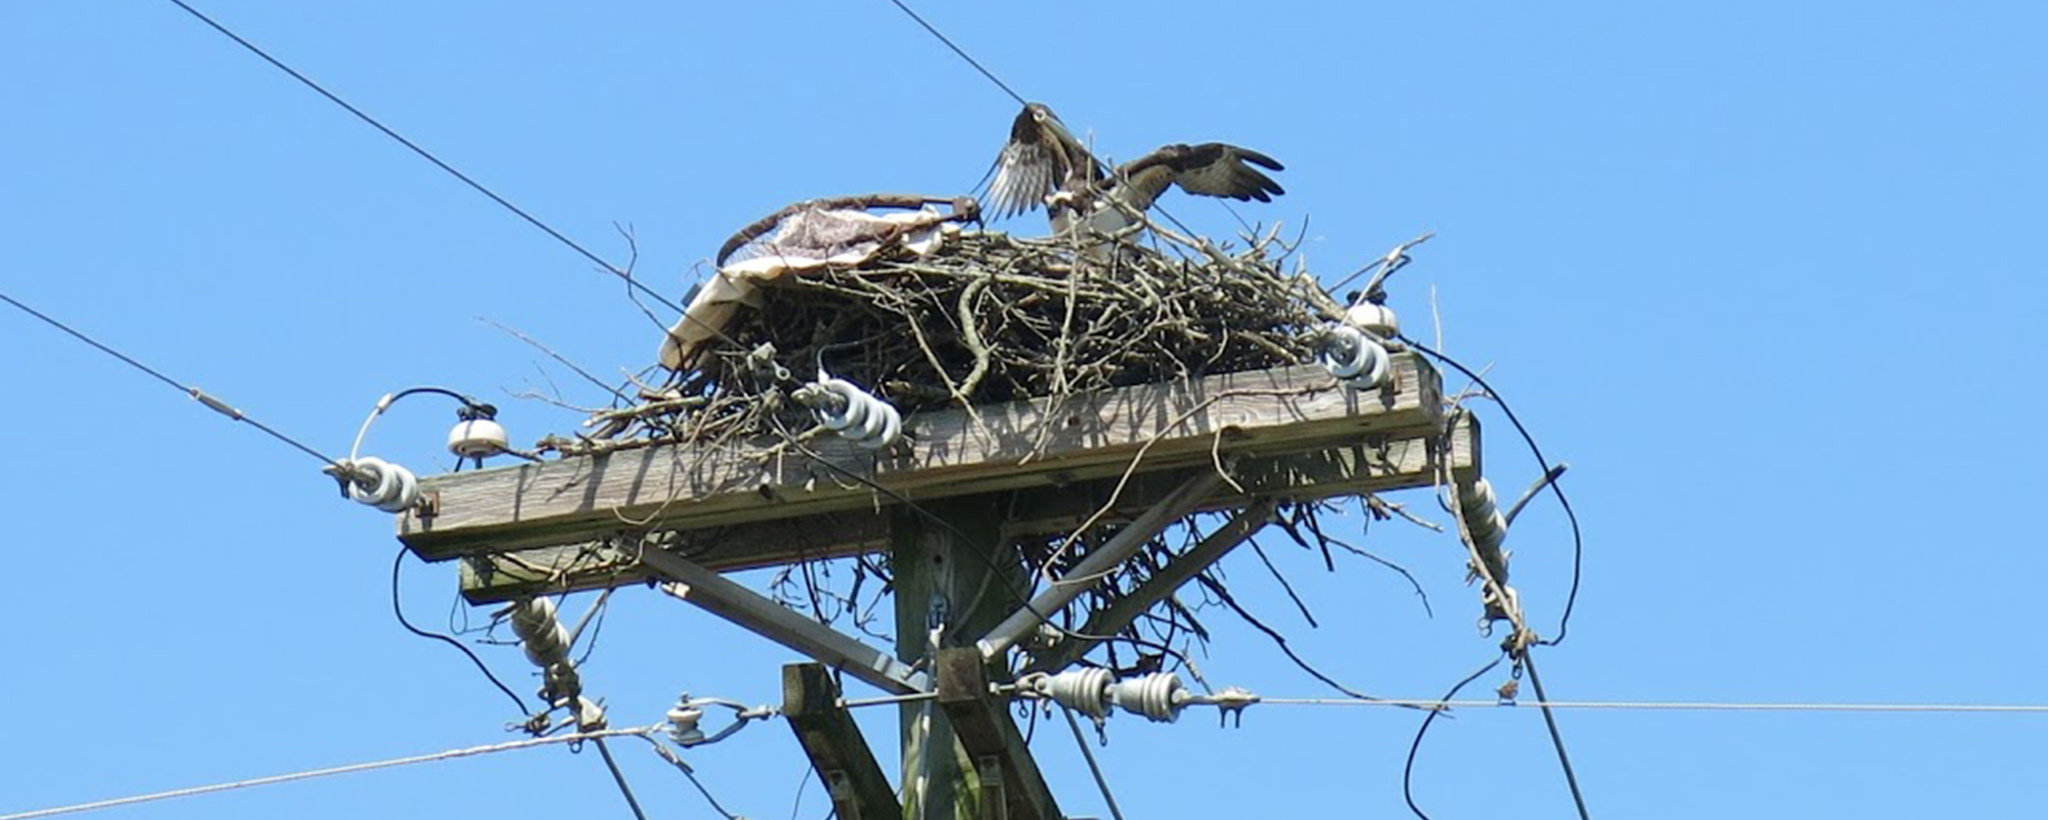 osprey nest on an electric pole